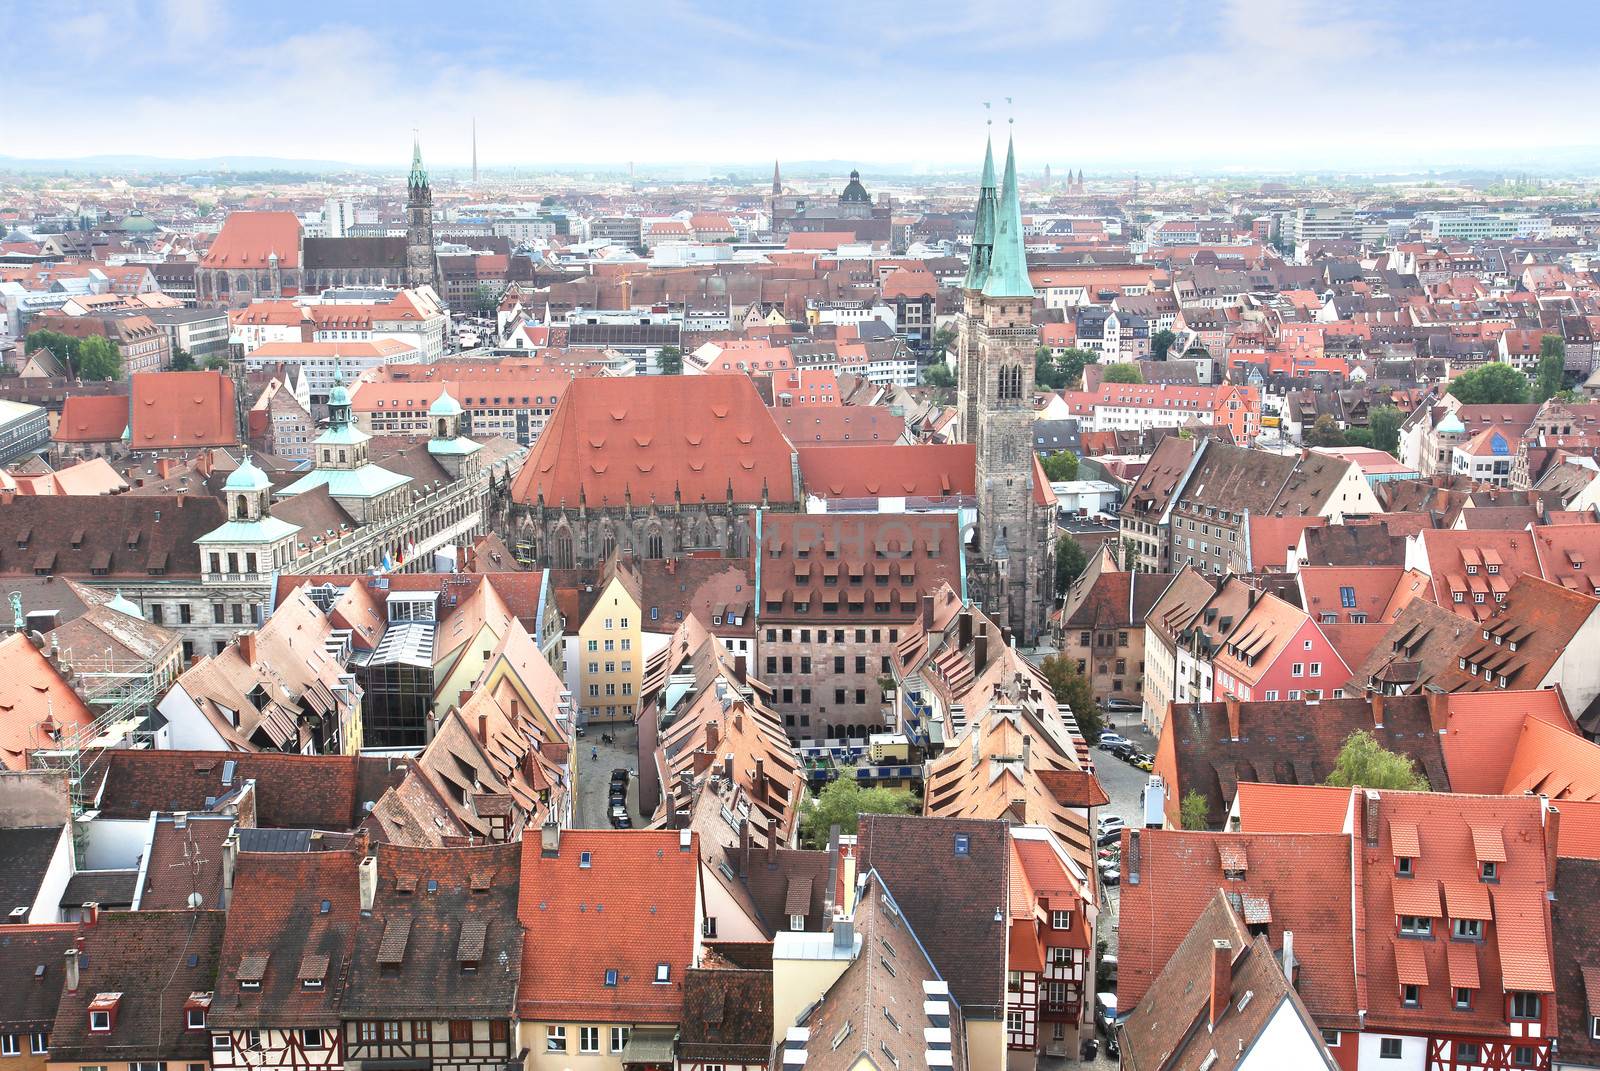 View of Nuremberg in Germany by Brigida_Soriano